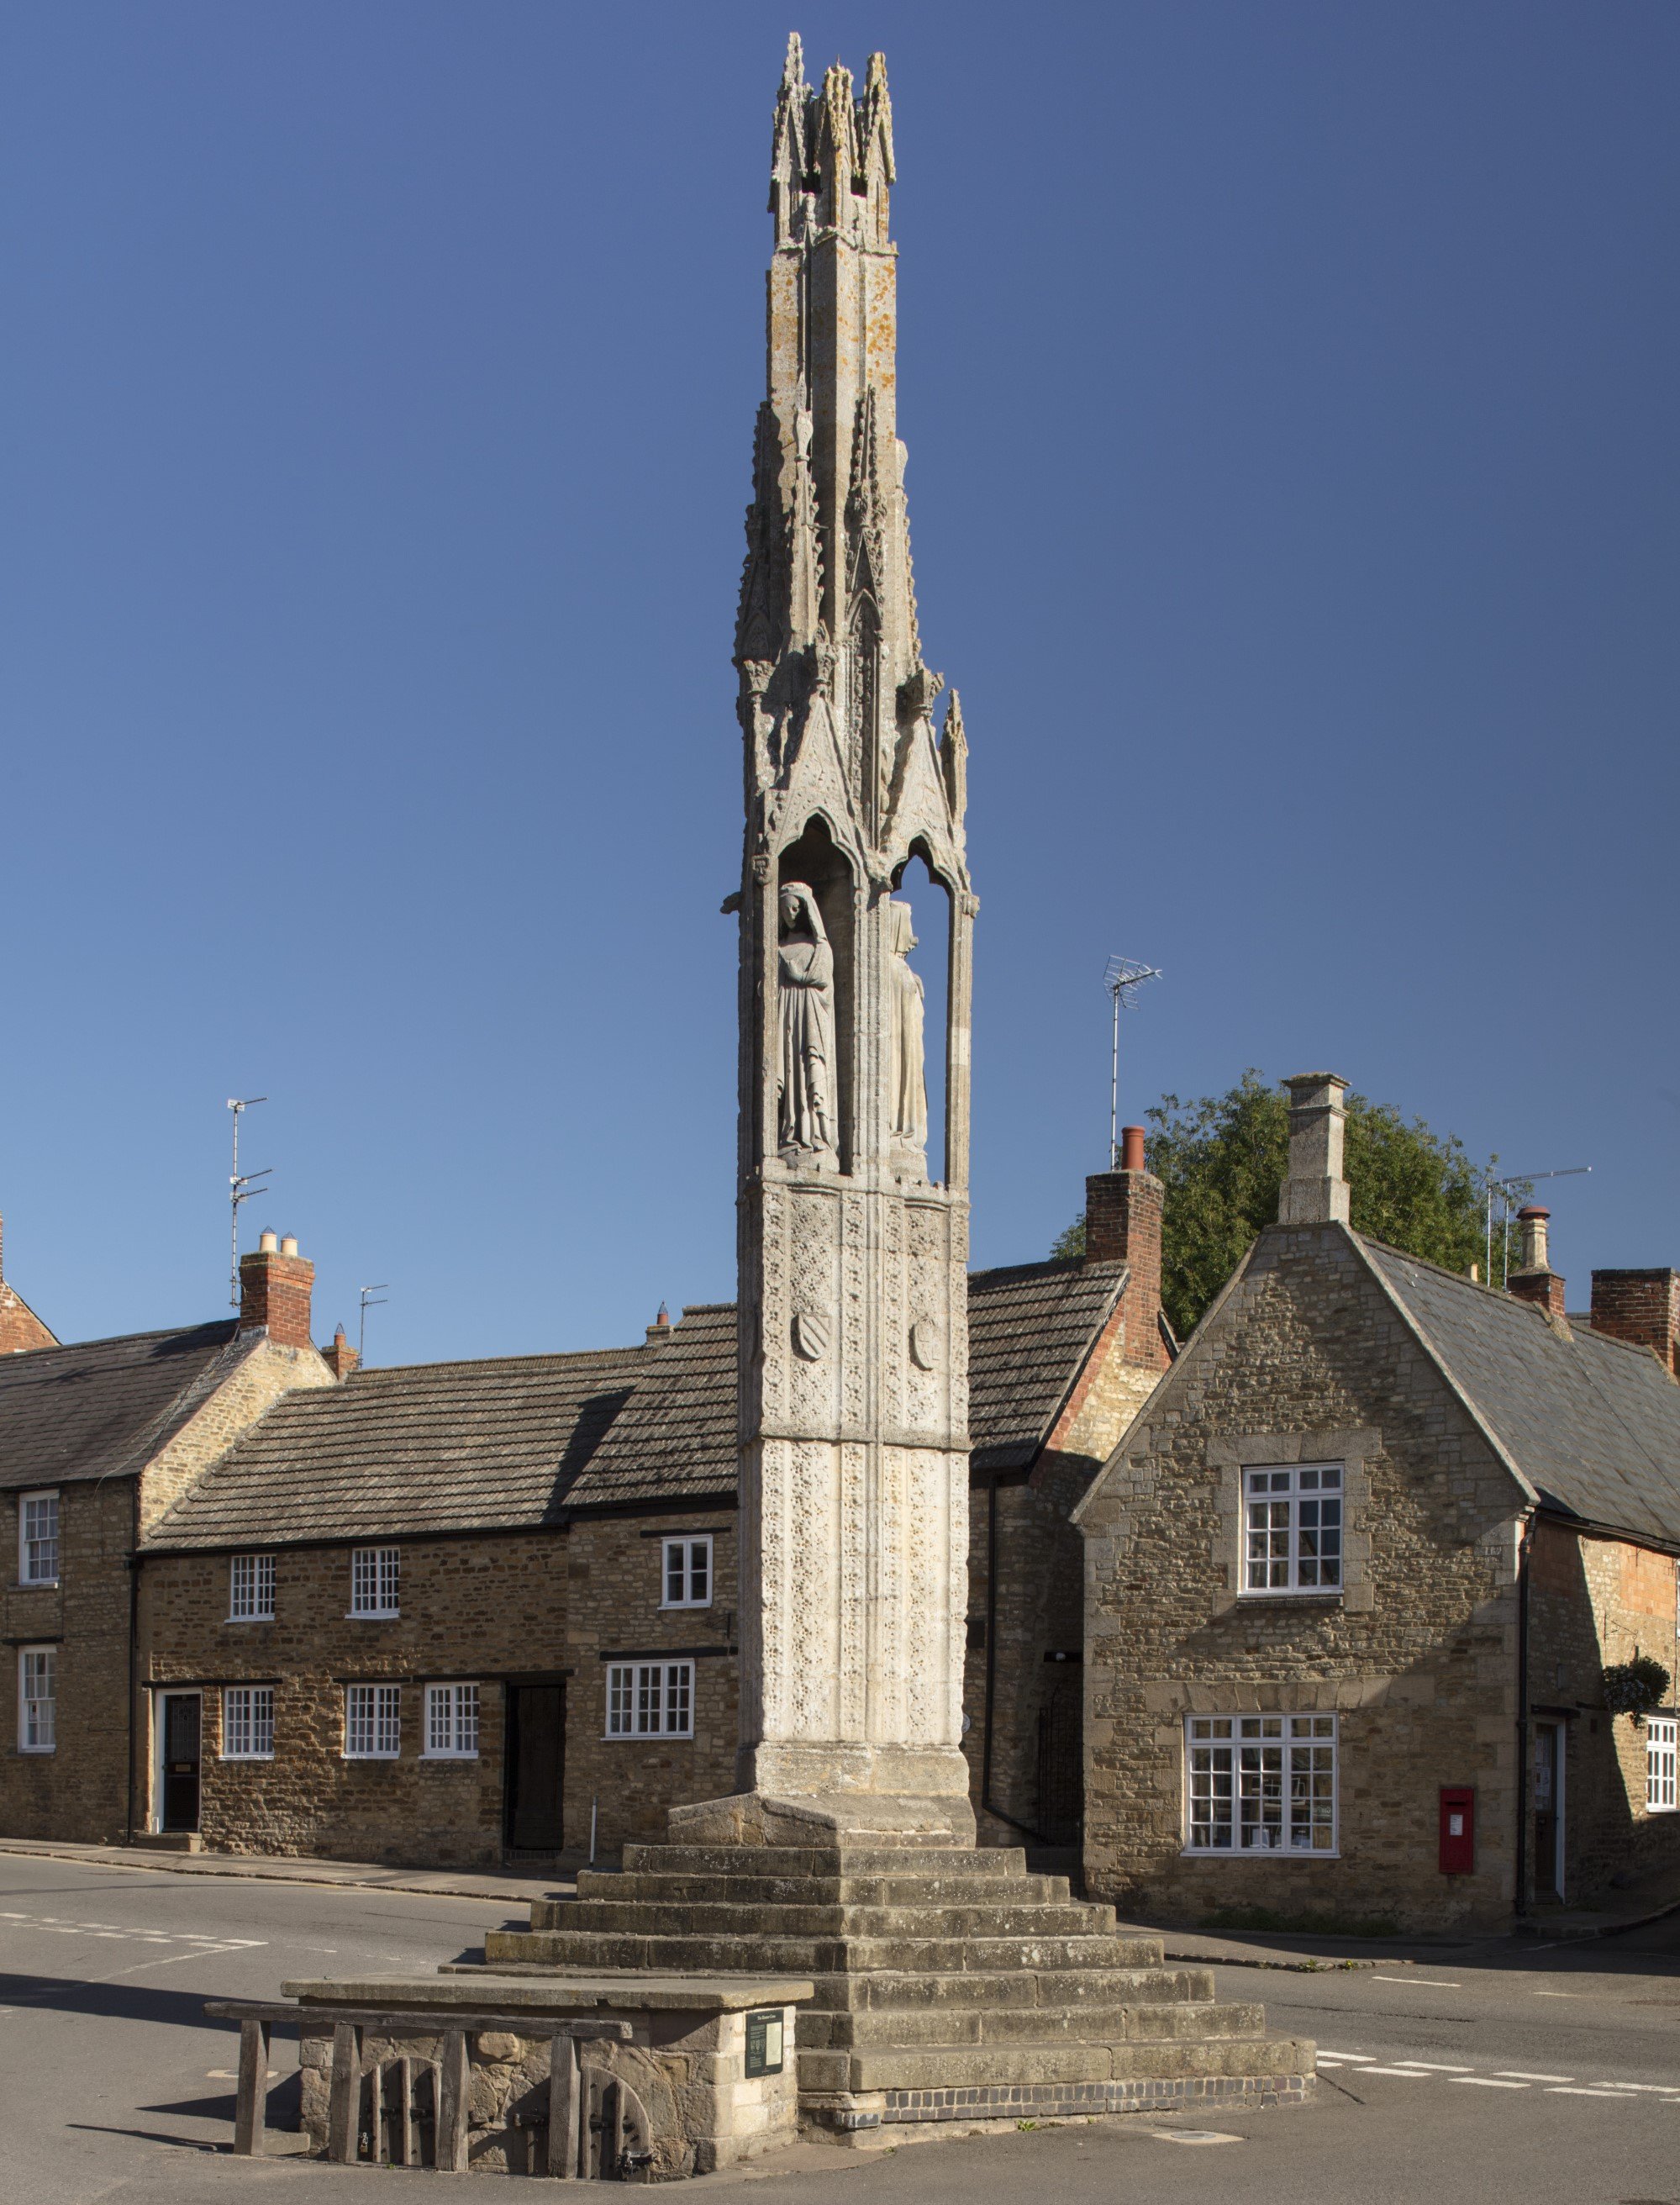 Image: Eleanor Cross in Geddington